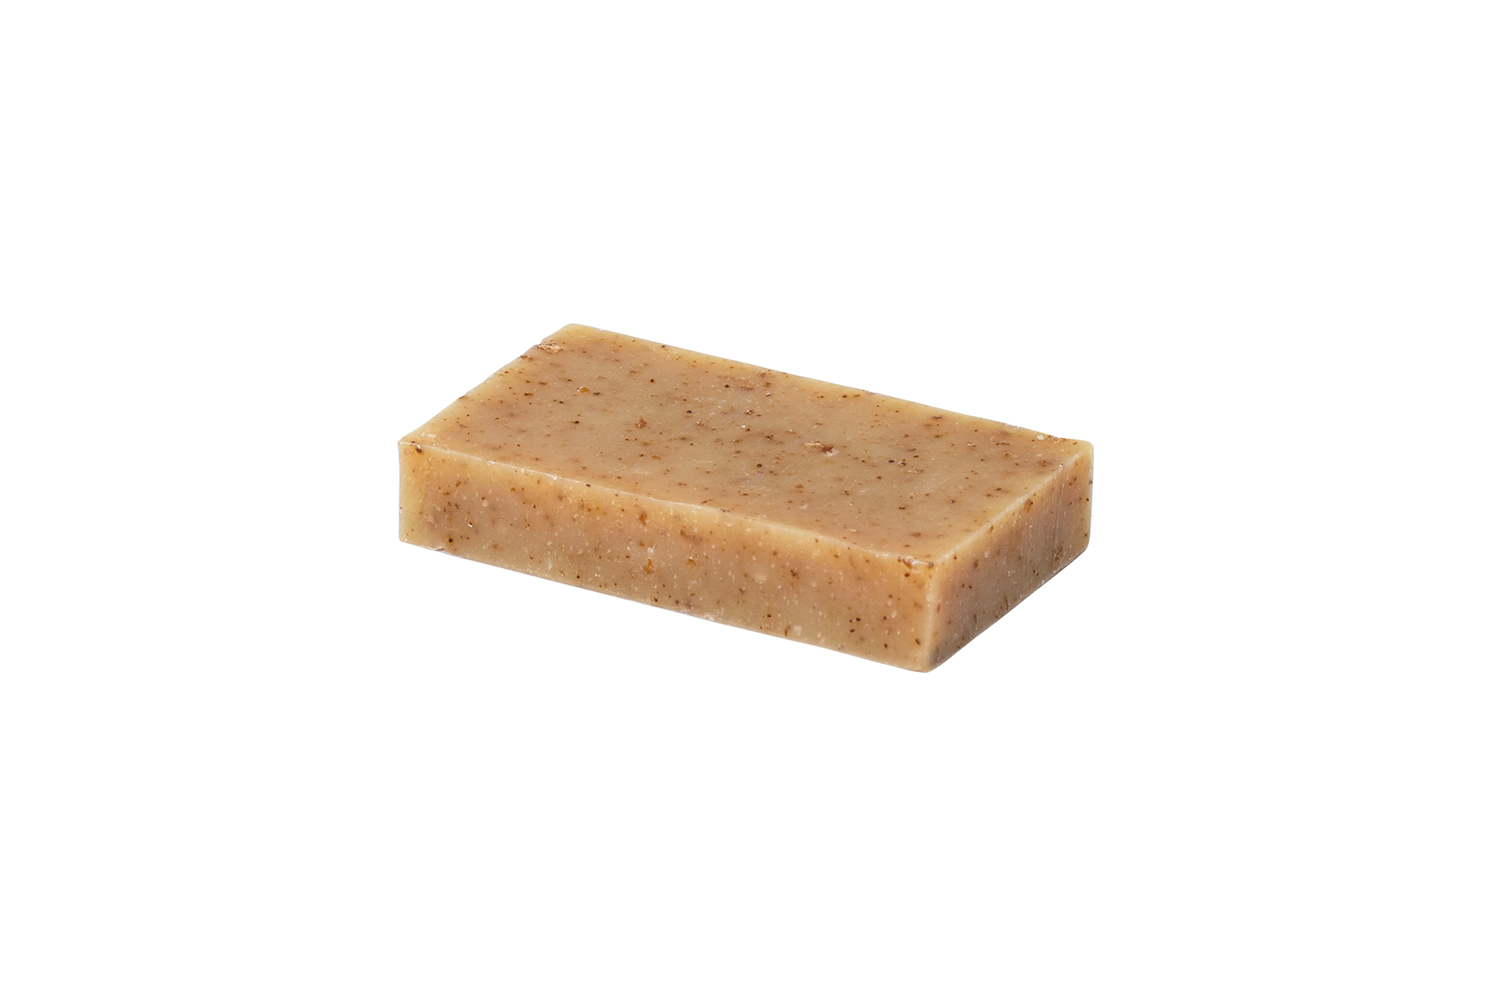 1 oz bar of oatmeal spice soap